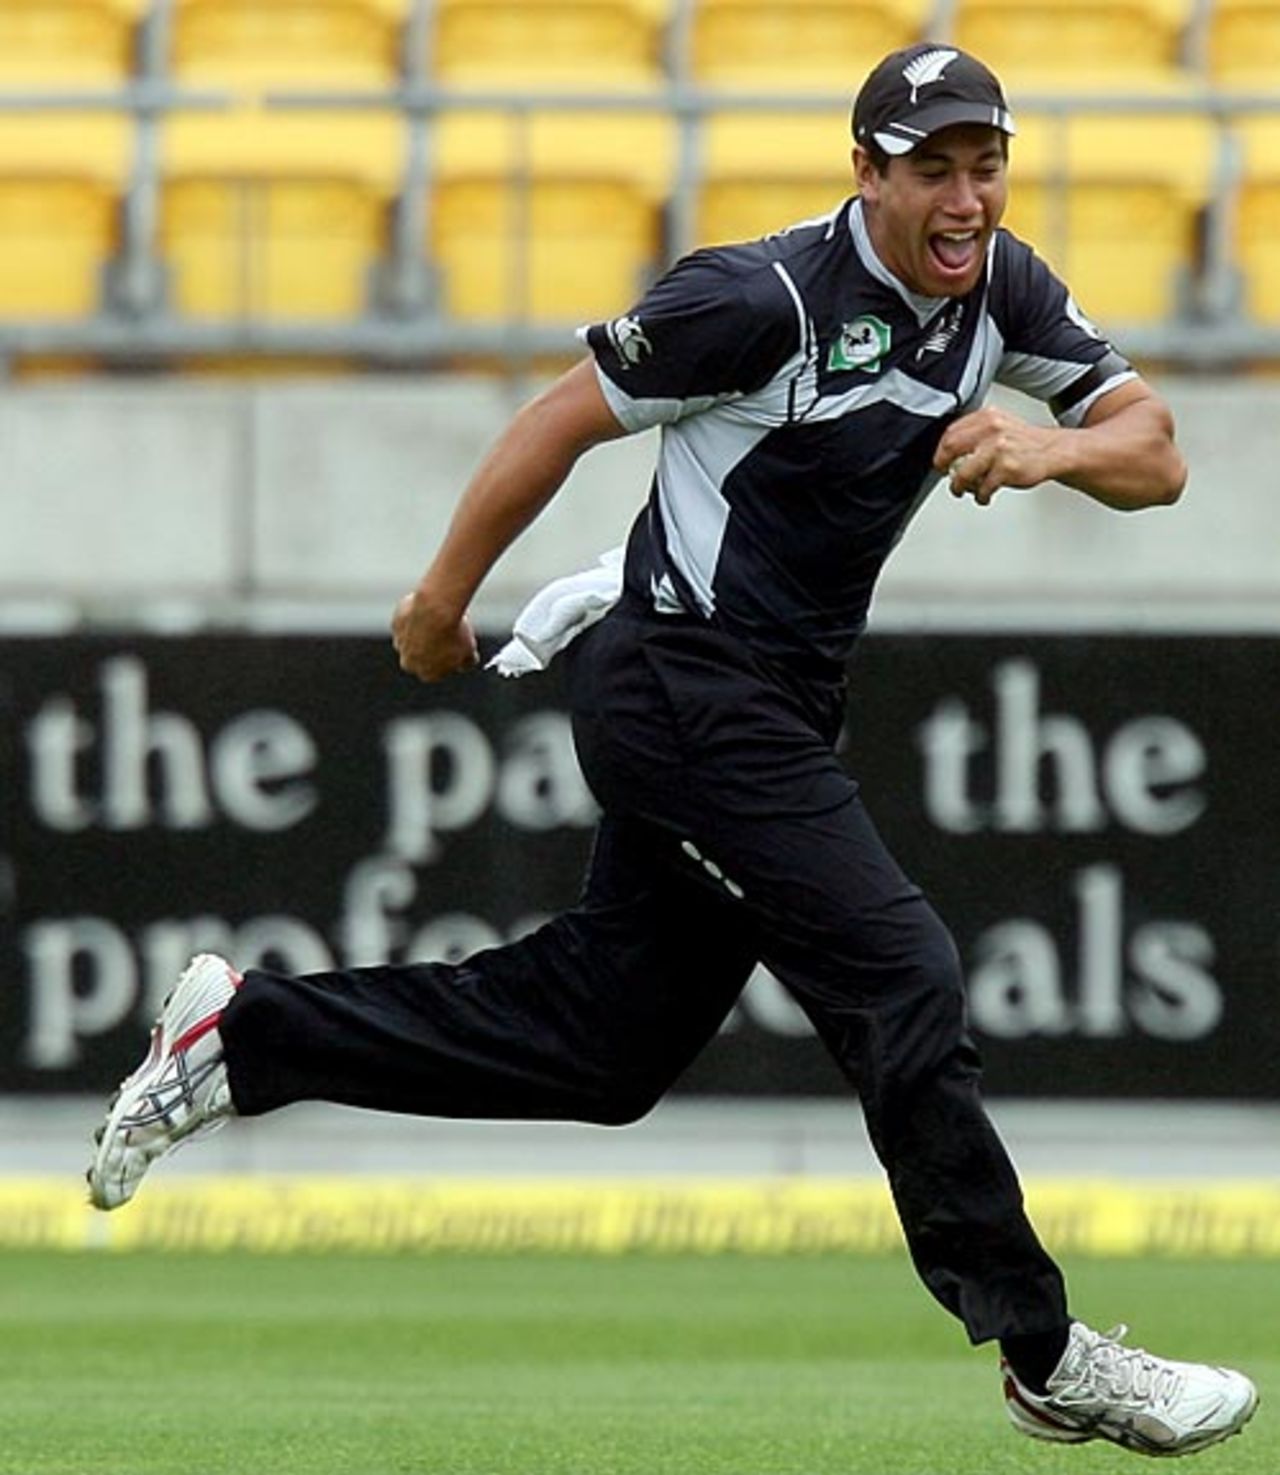 Ross Taylor took a sharp catch to dismiss Yuvraj Singh, New Zealand v India, 2nd ODI, Westpac Stadium, Wellington, March 6, 2009